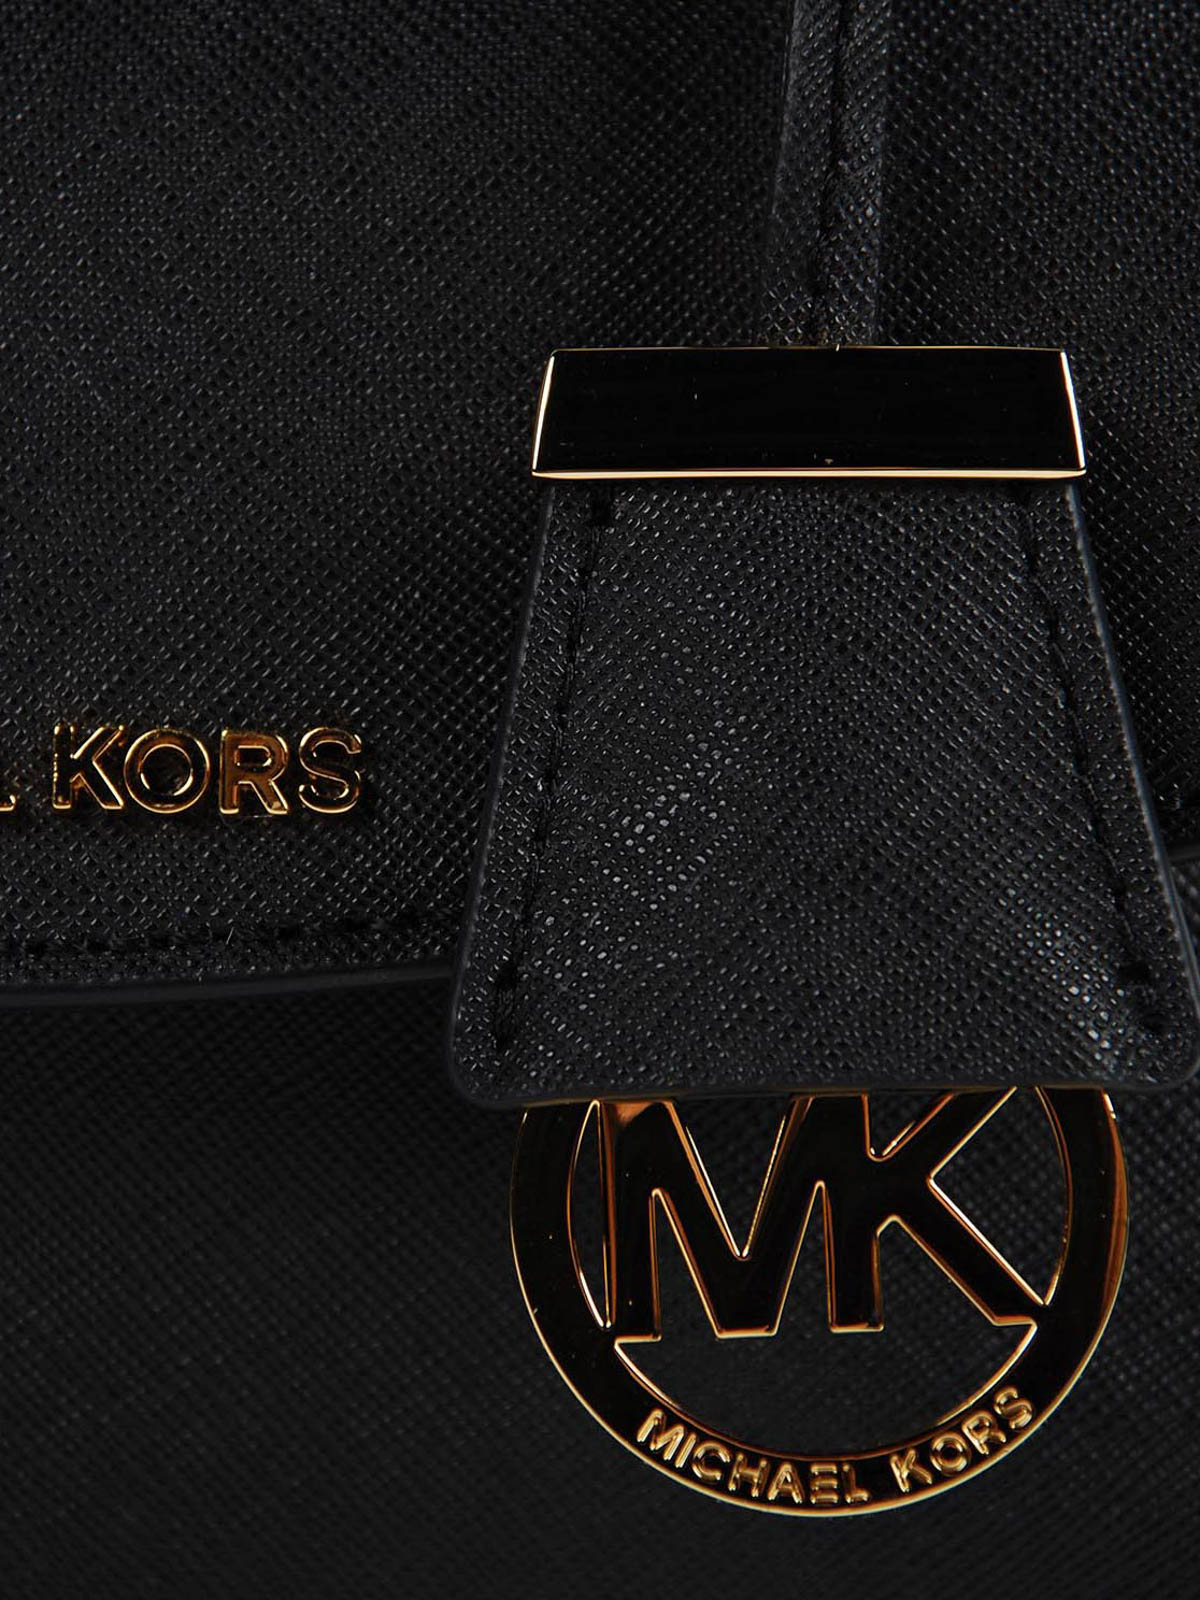 MICHAEL Michael Kors Ava Extra Small Cross Body Bag  Leather handbags  crossbody, Mk handbags, Purses crossbody